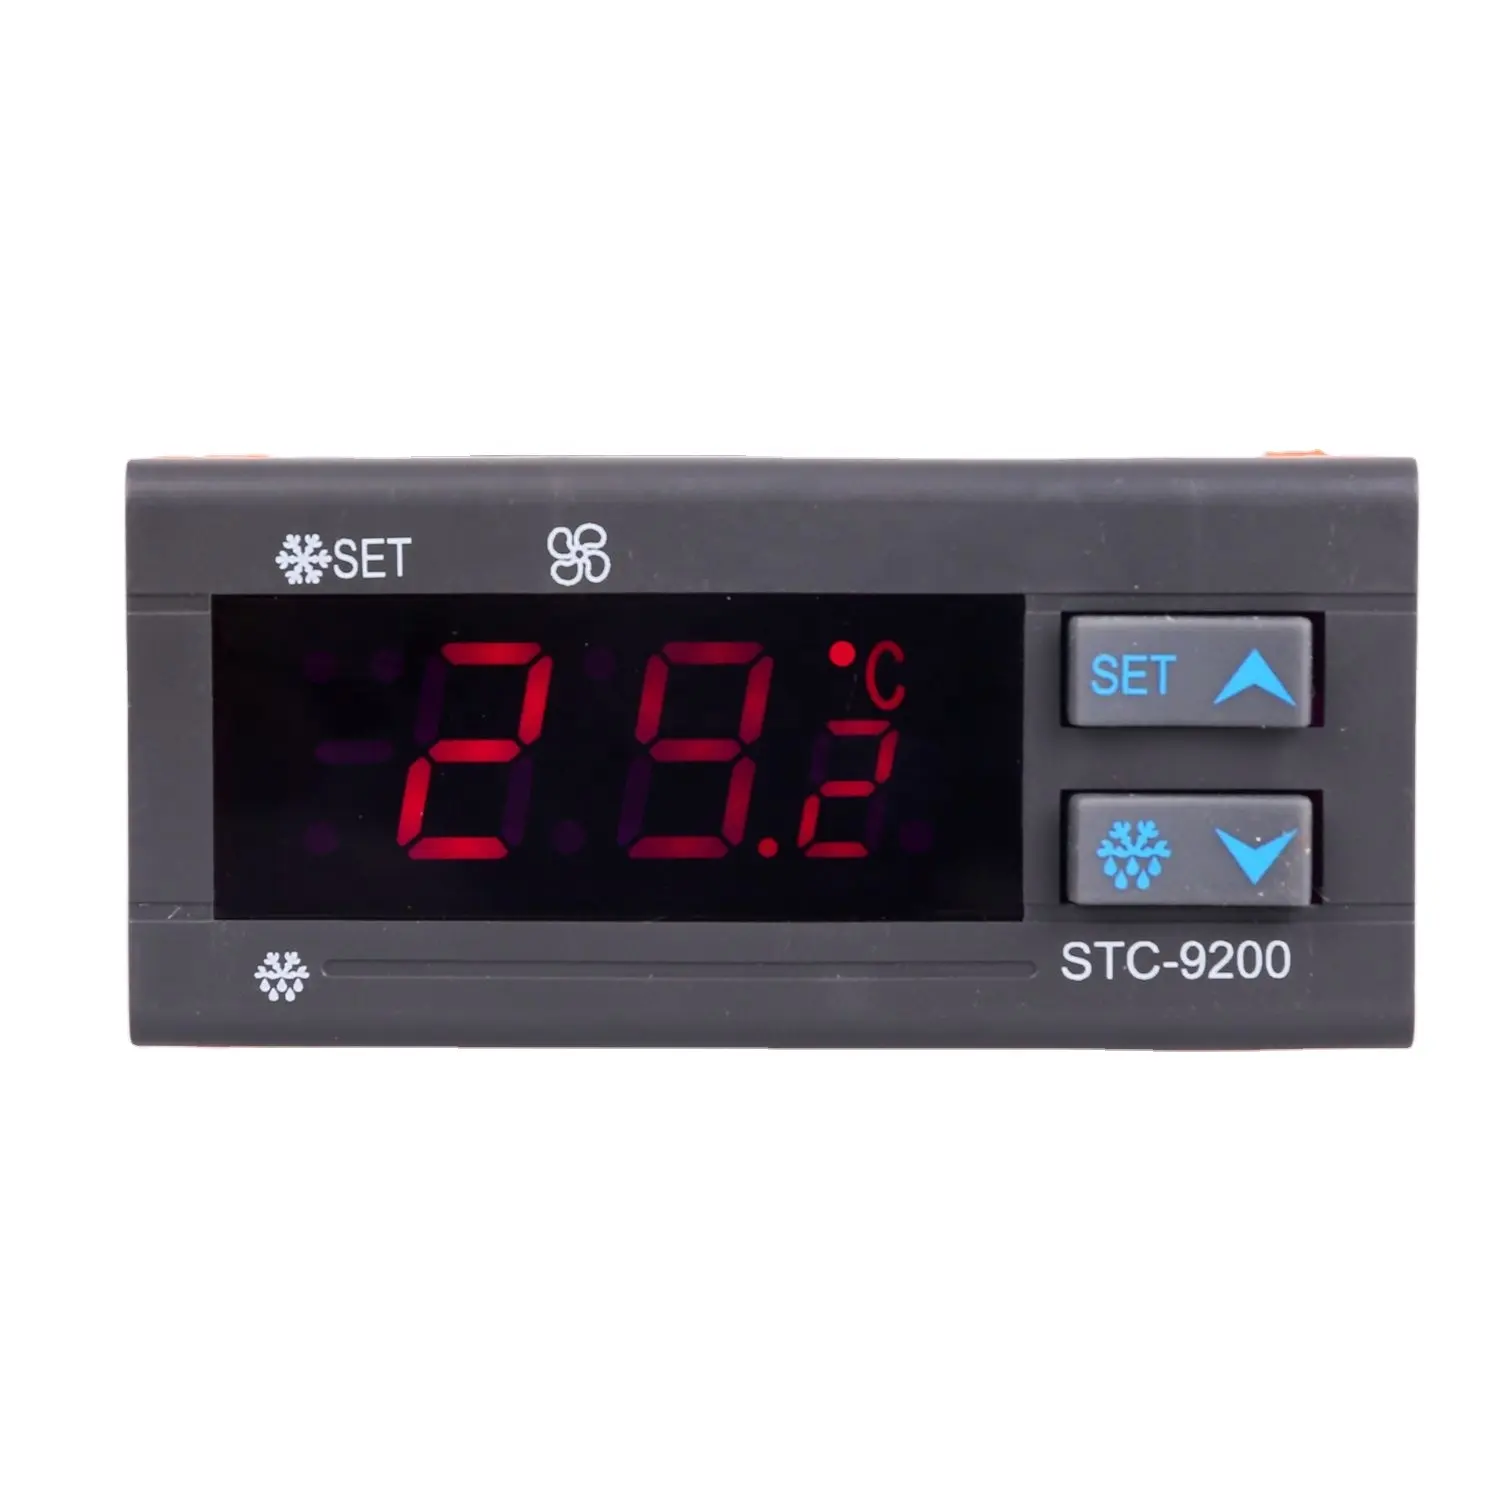 Digital Lcd Thermostat Sensor Thermostat Wholesale Thermoregulator 220v digital temperature controller refrigerator STC-9200